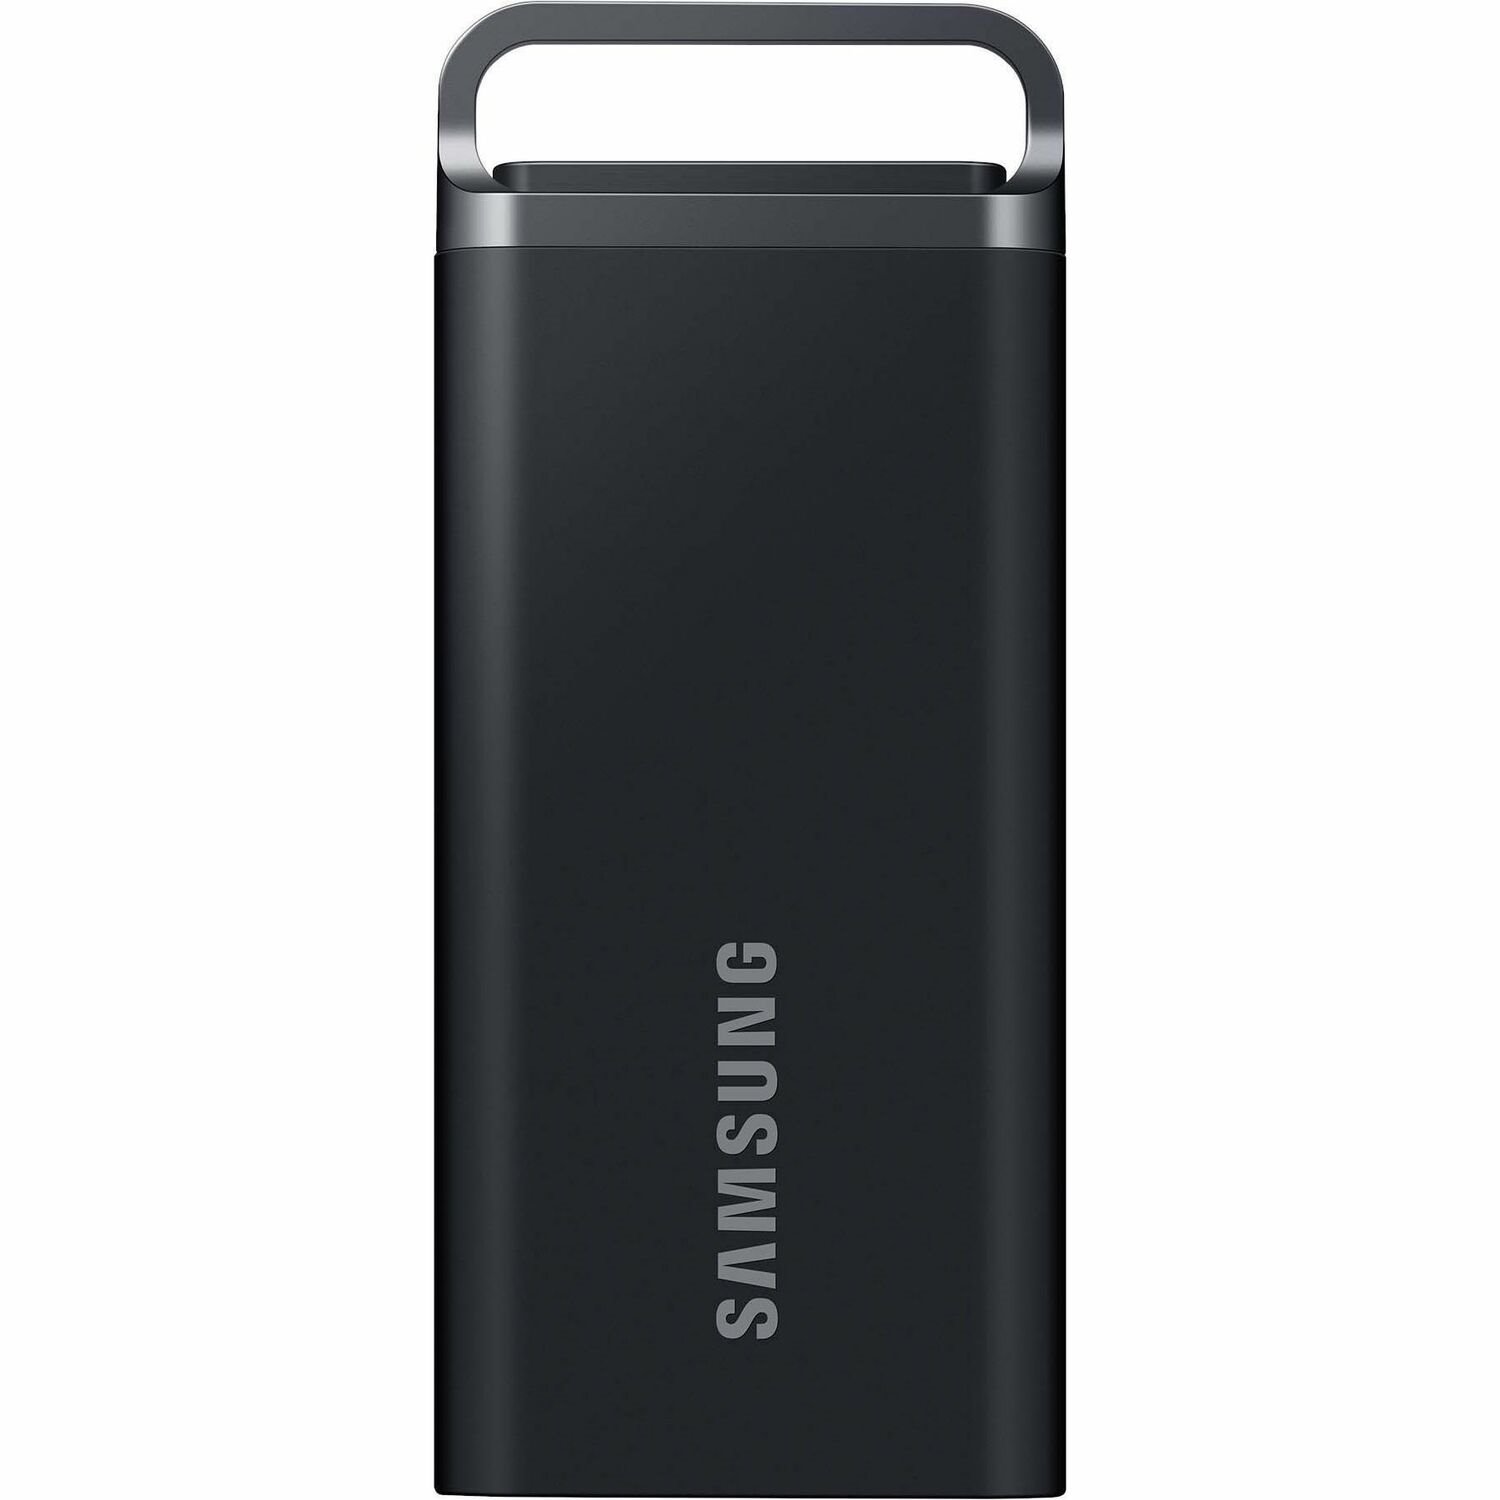 Samsung T5 EVO 8 TB Portable Solid State Drive - External - Black